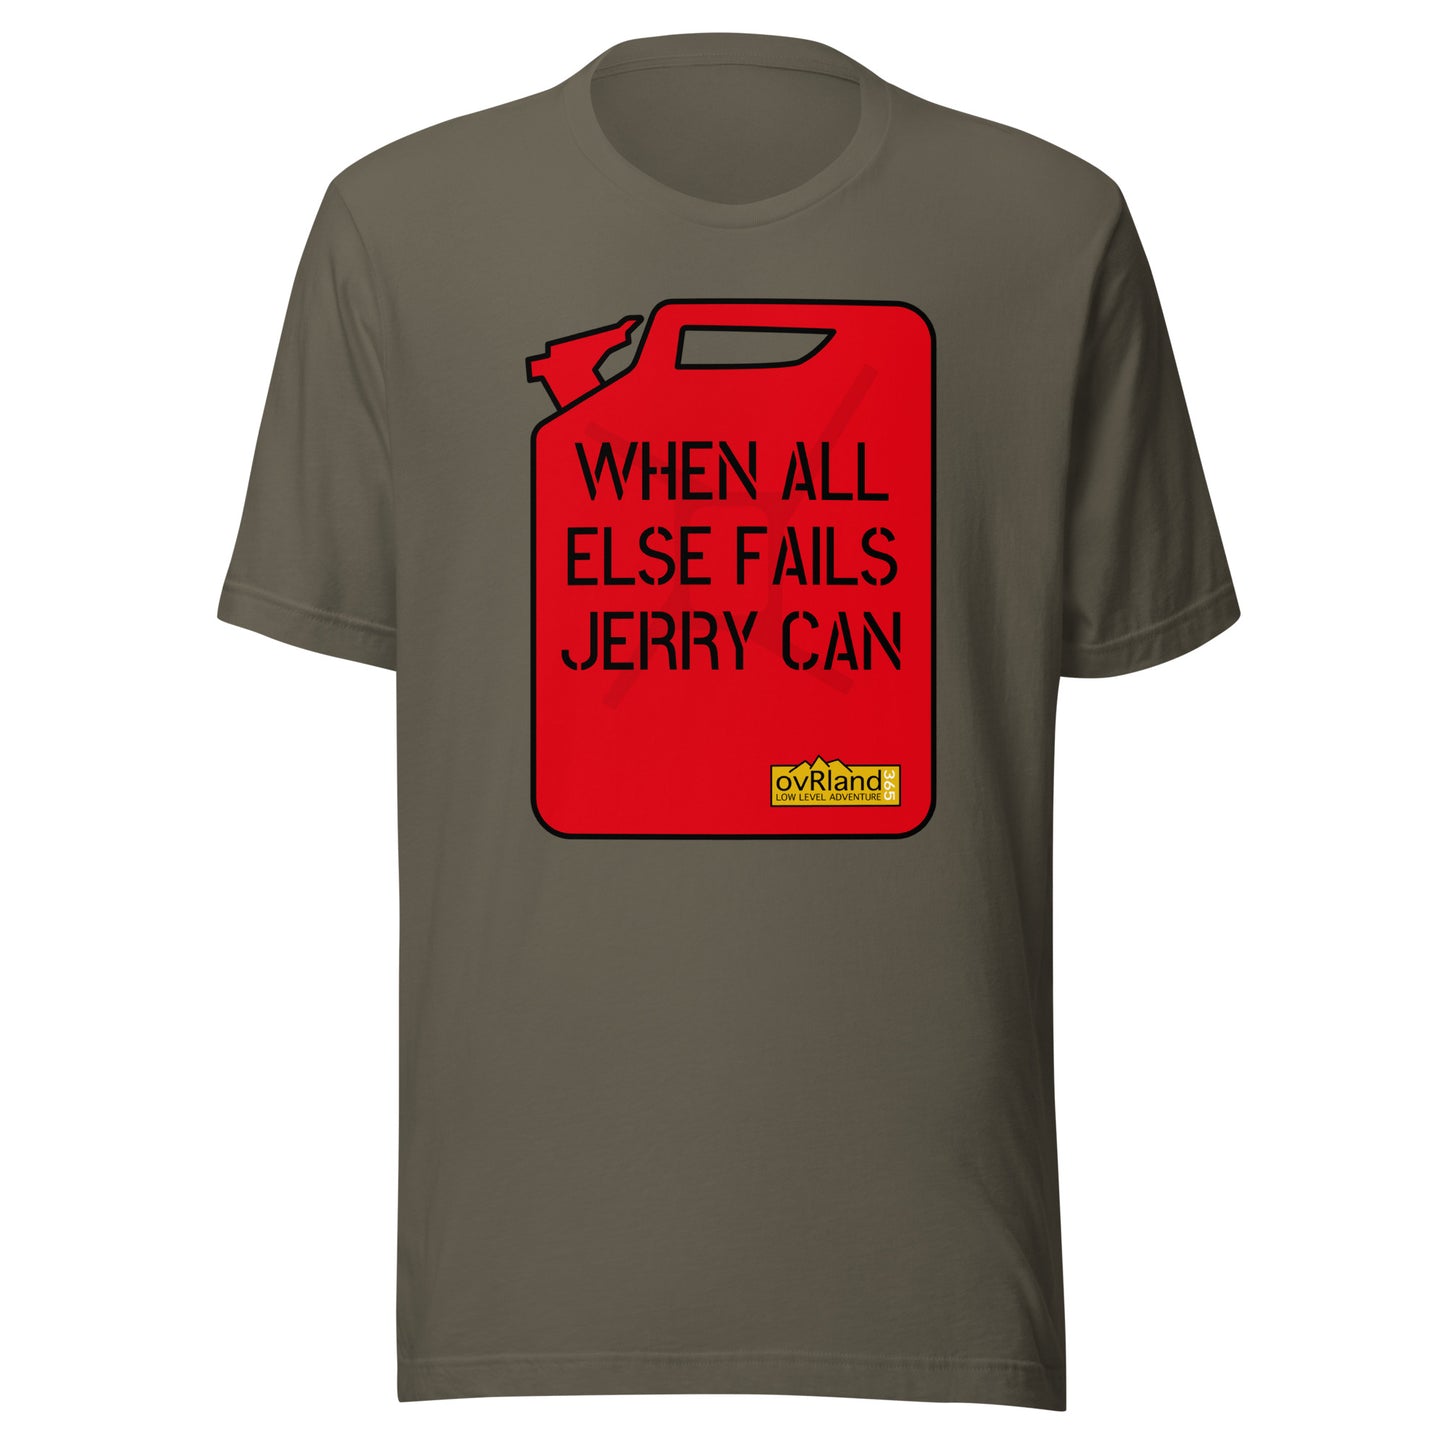 "WHEN ALL ELSE FAILS, JERRY CAN" - Green T-shirt. overland365.com